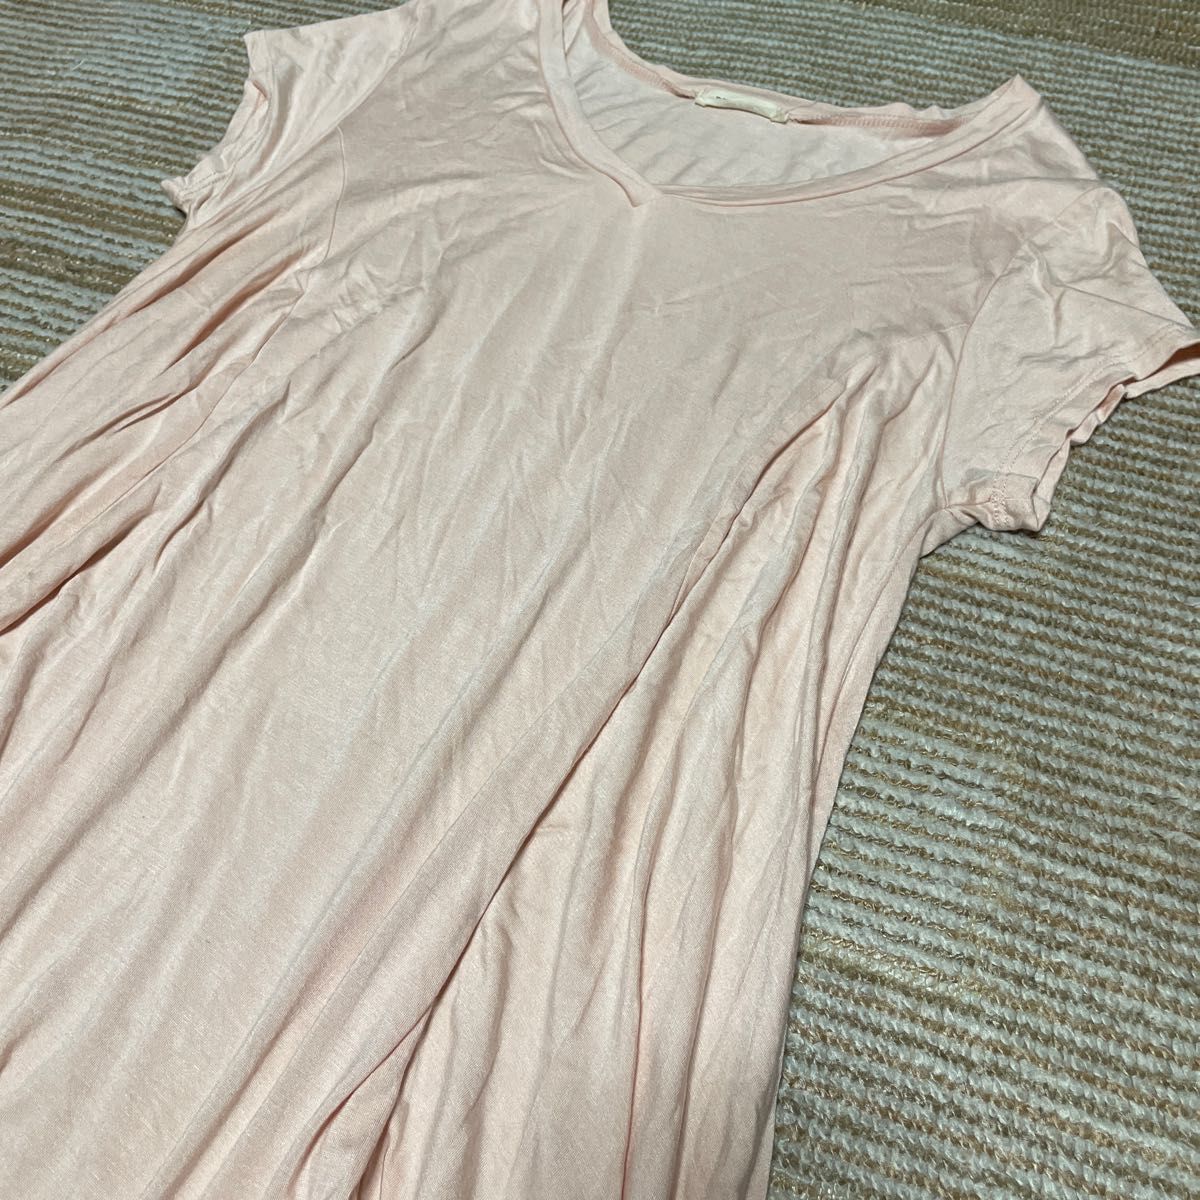 PROMESA Made in USA レディース ピンク 半袖 Aライン チュニックワンピース Tシャツ ワンピース 